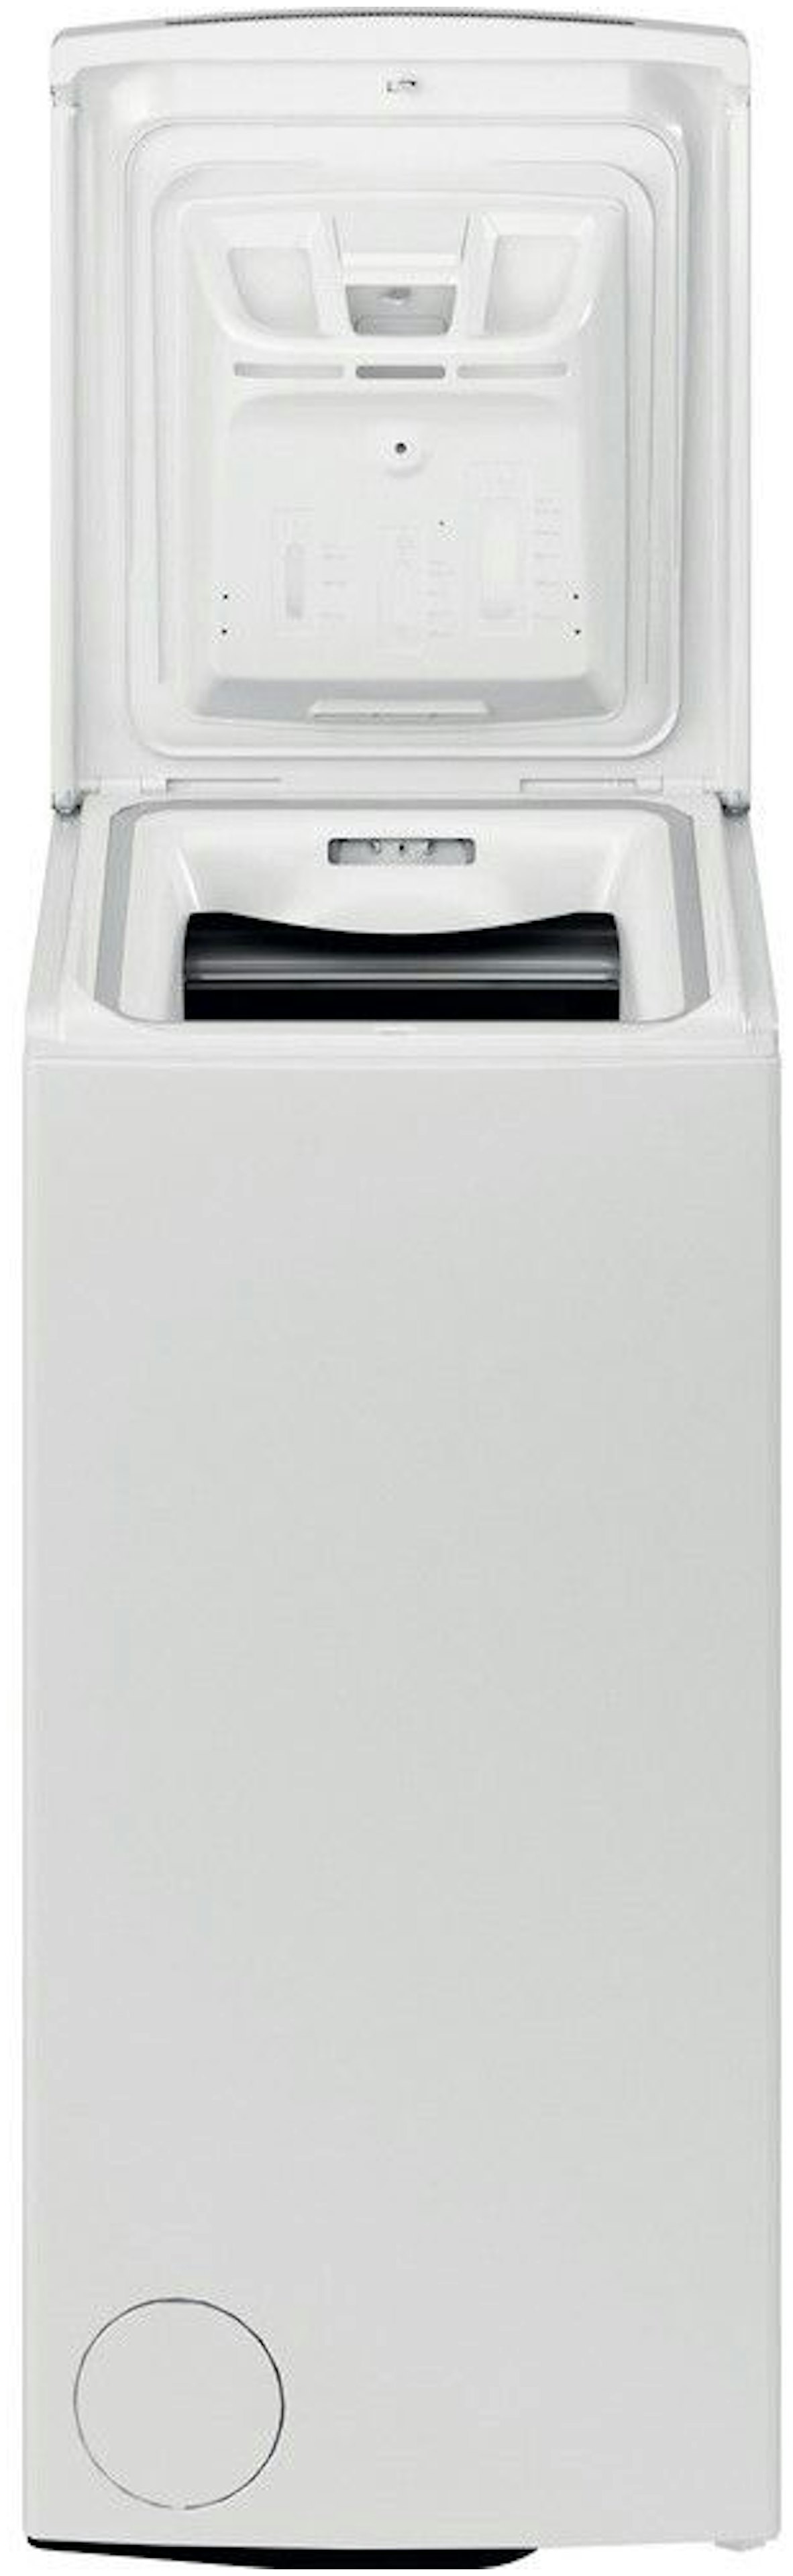 Whirlpool wasmachine TDLR 65230L BE afbeelding 3